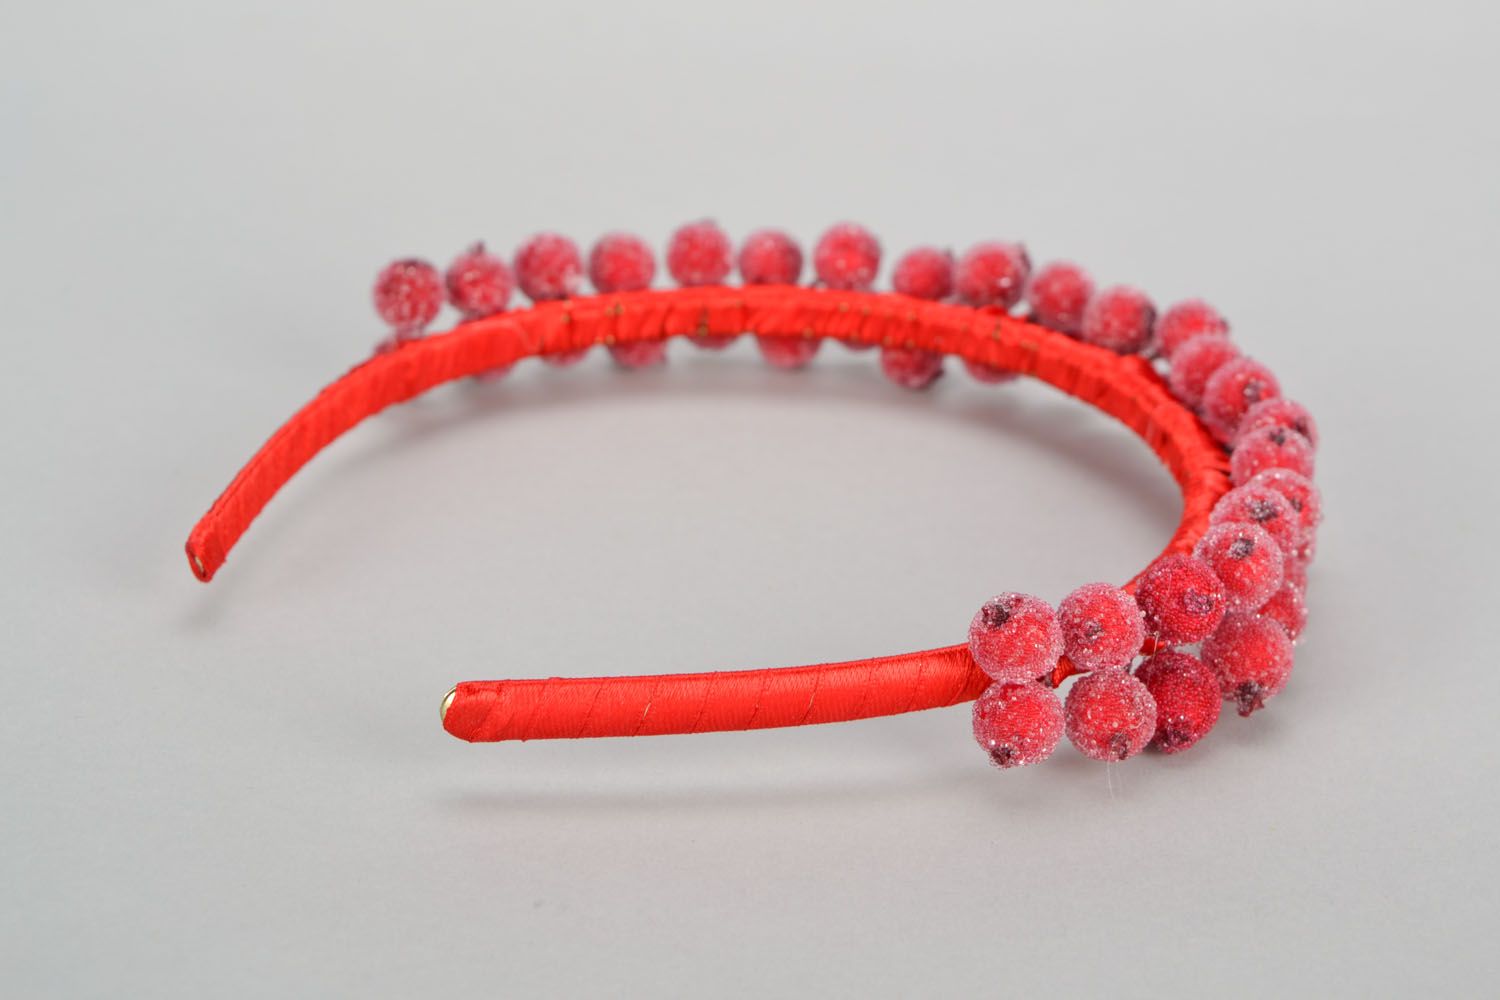 Homemade headband with red berries photo 4